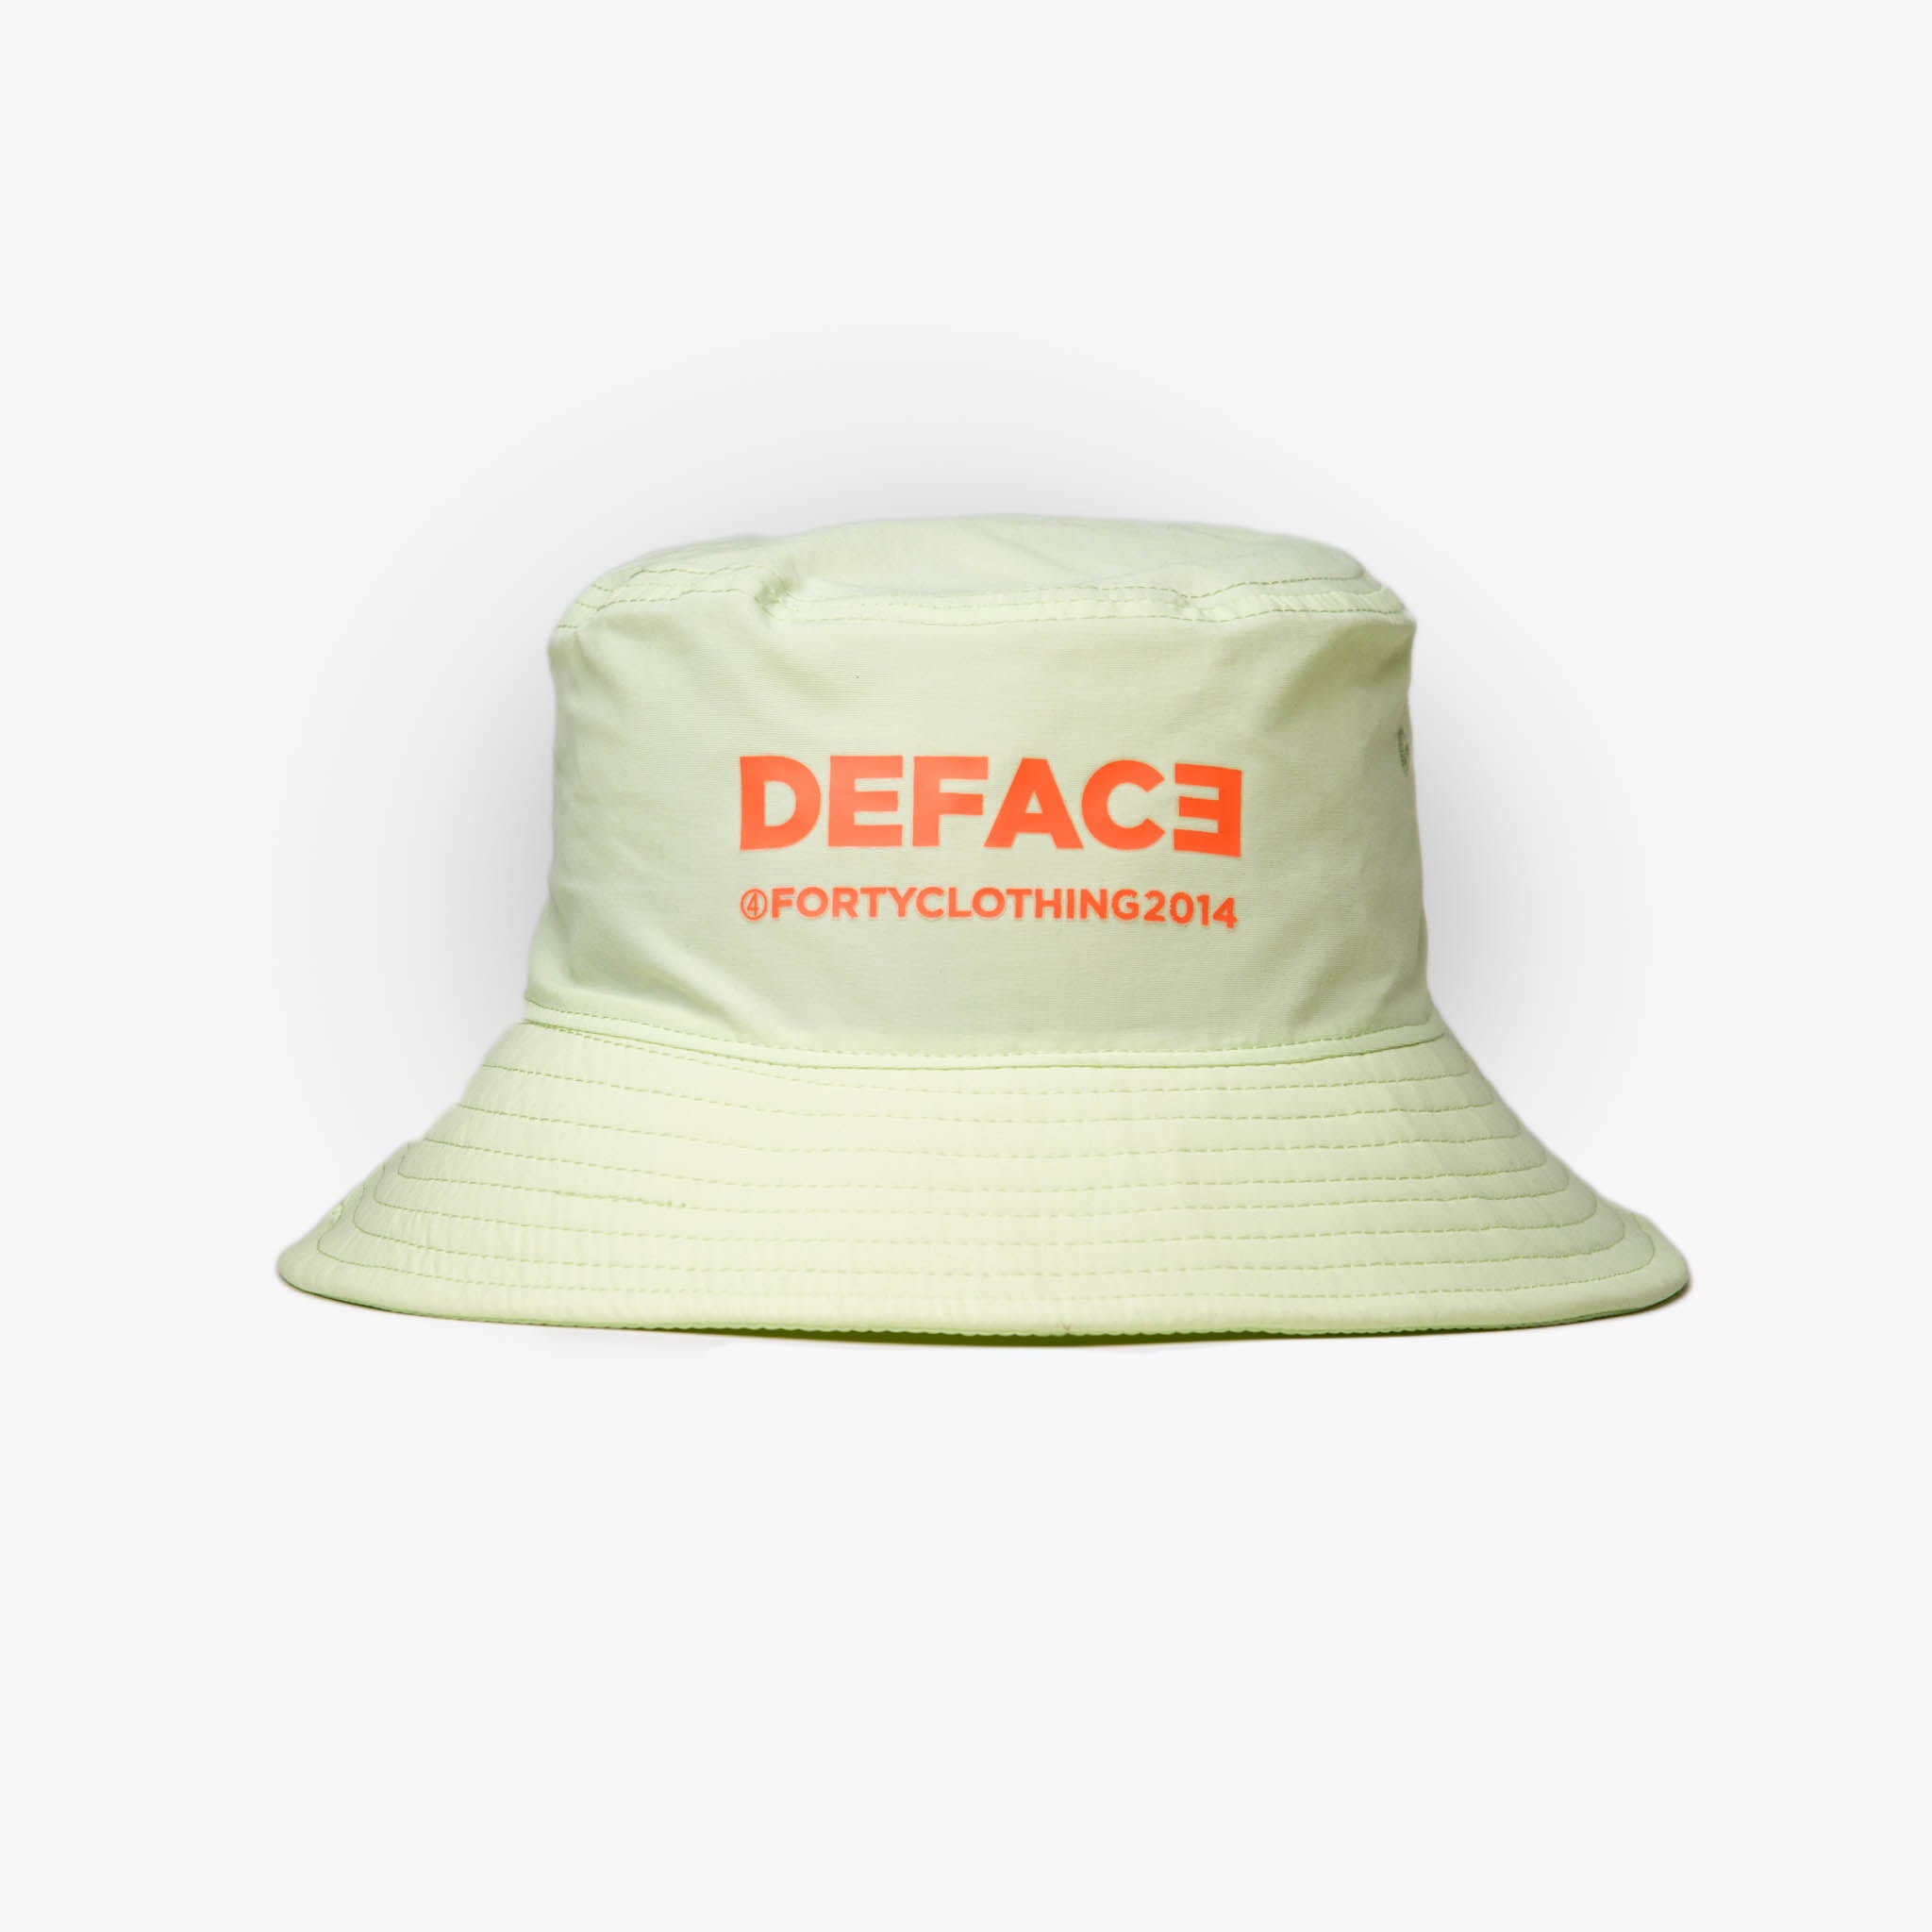 Ray Deface Bucket Hat (Acid Yellow)